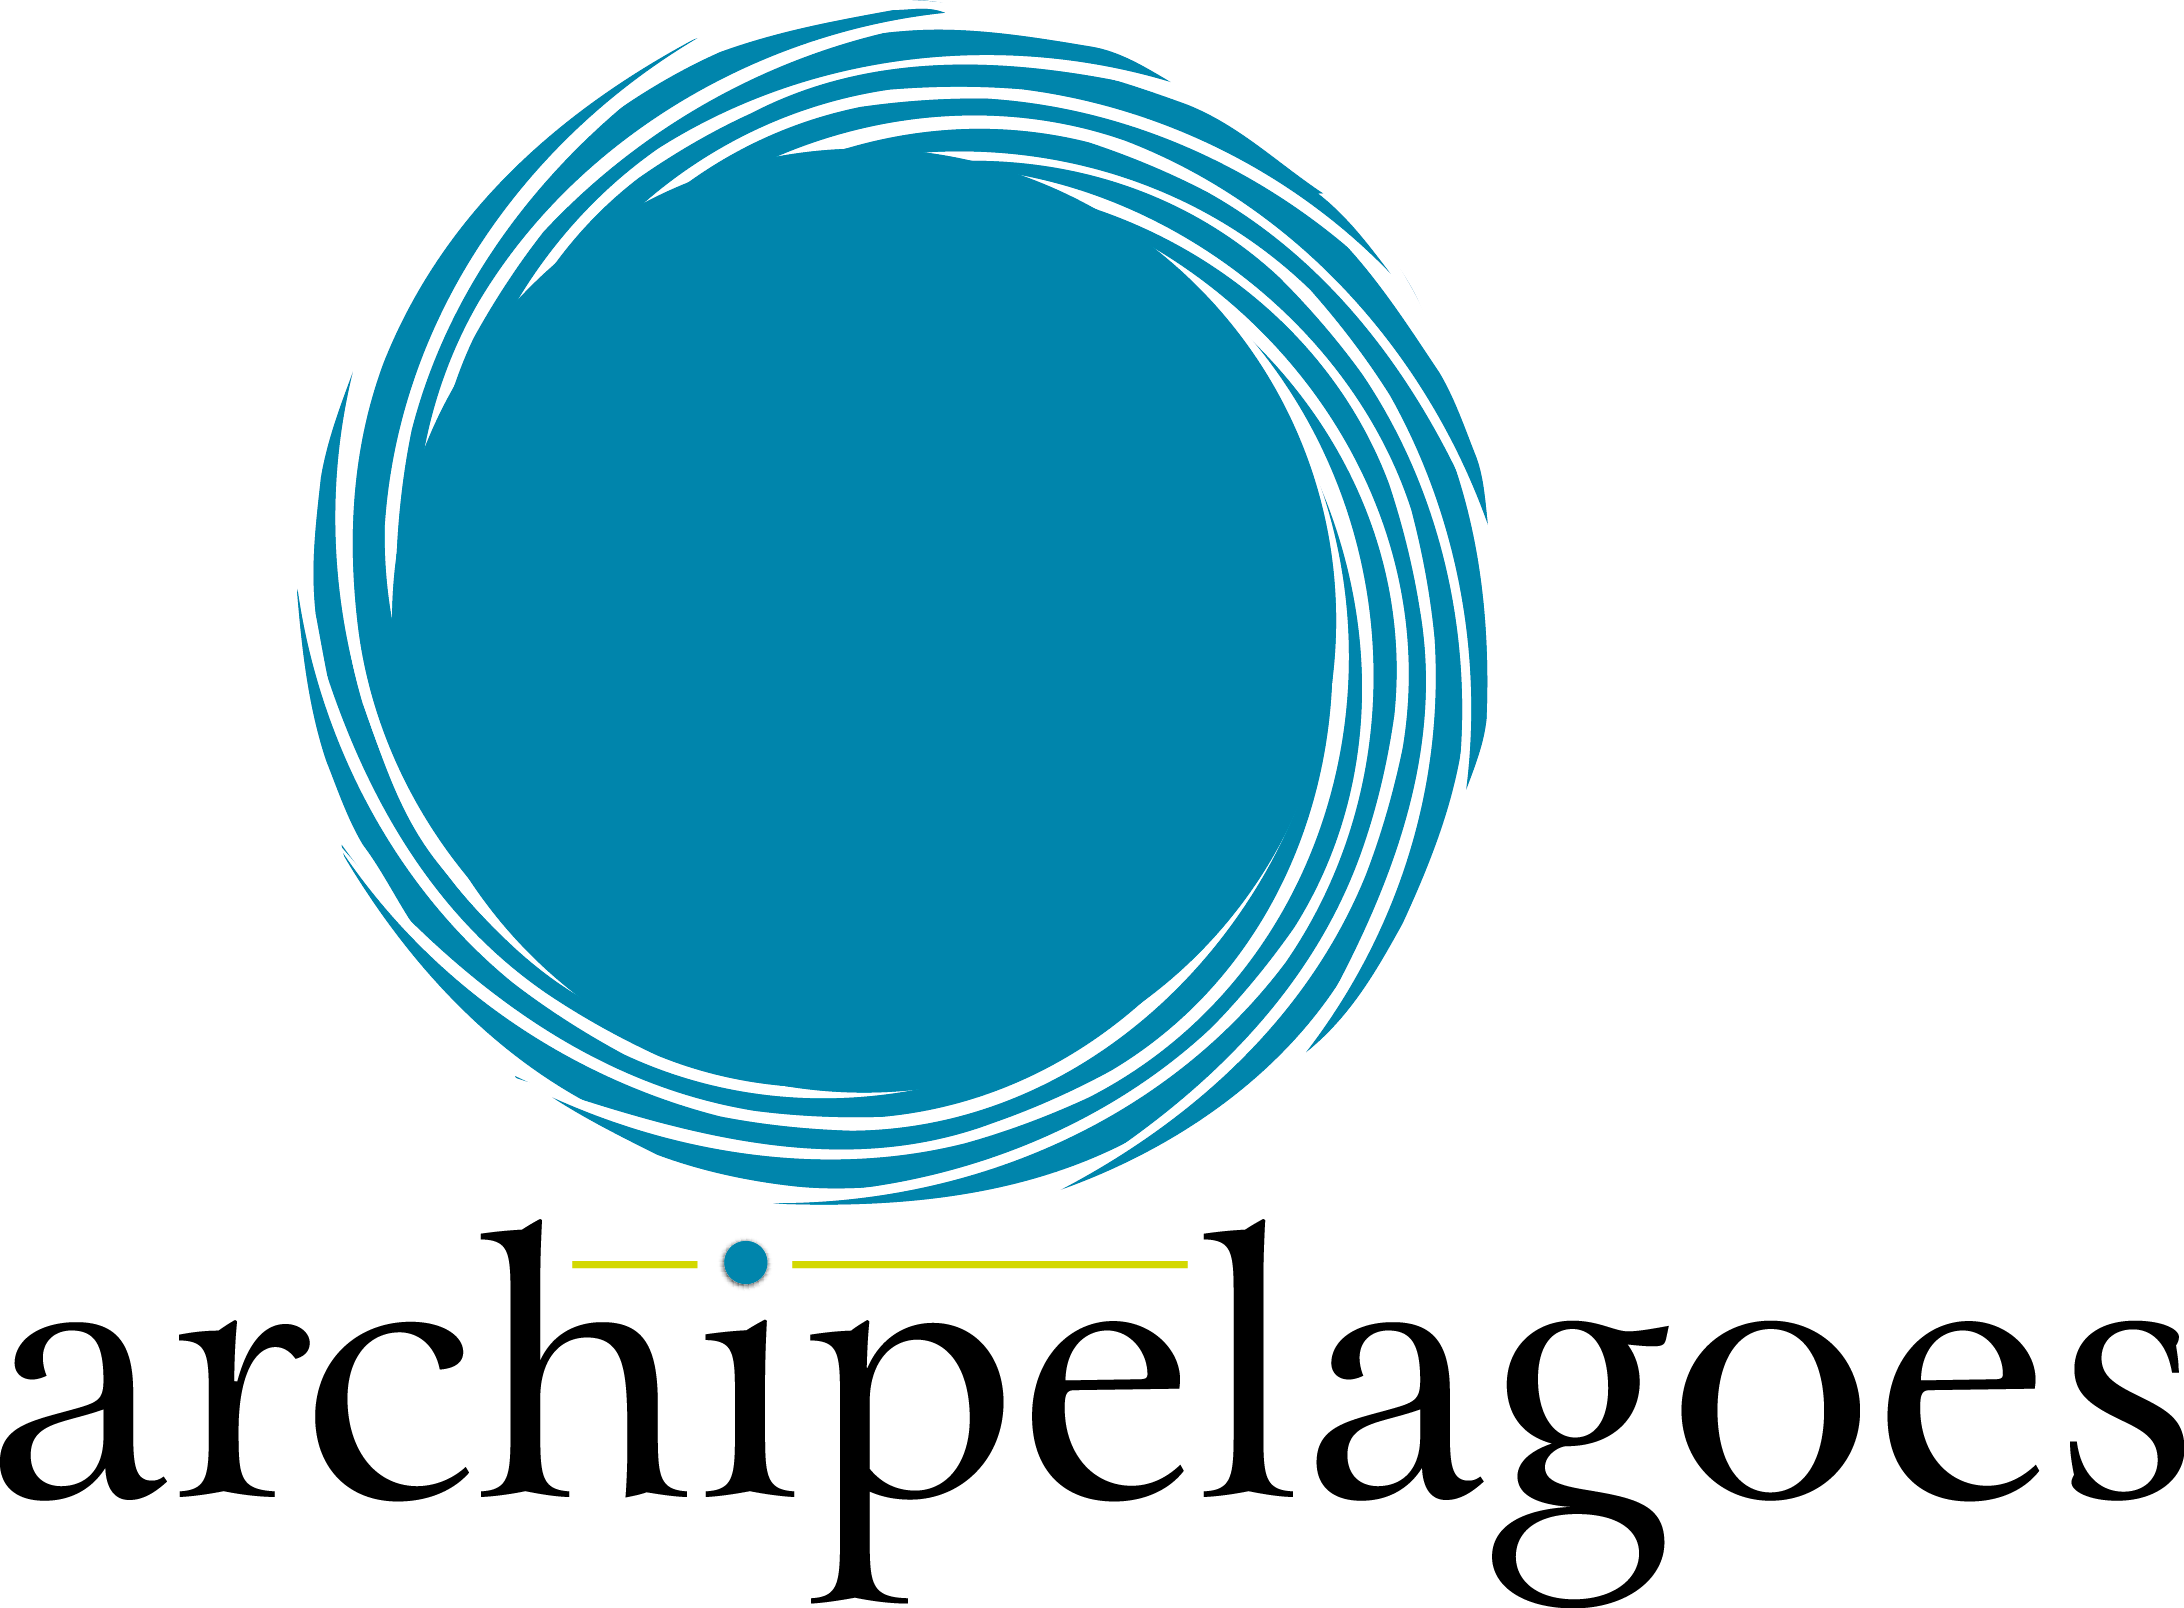 Archipelagoes.eps.png